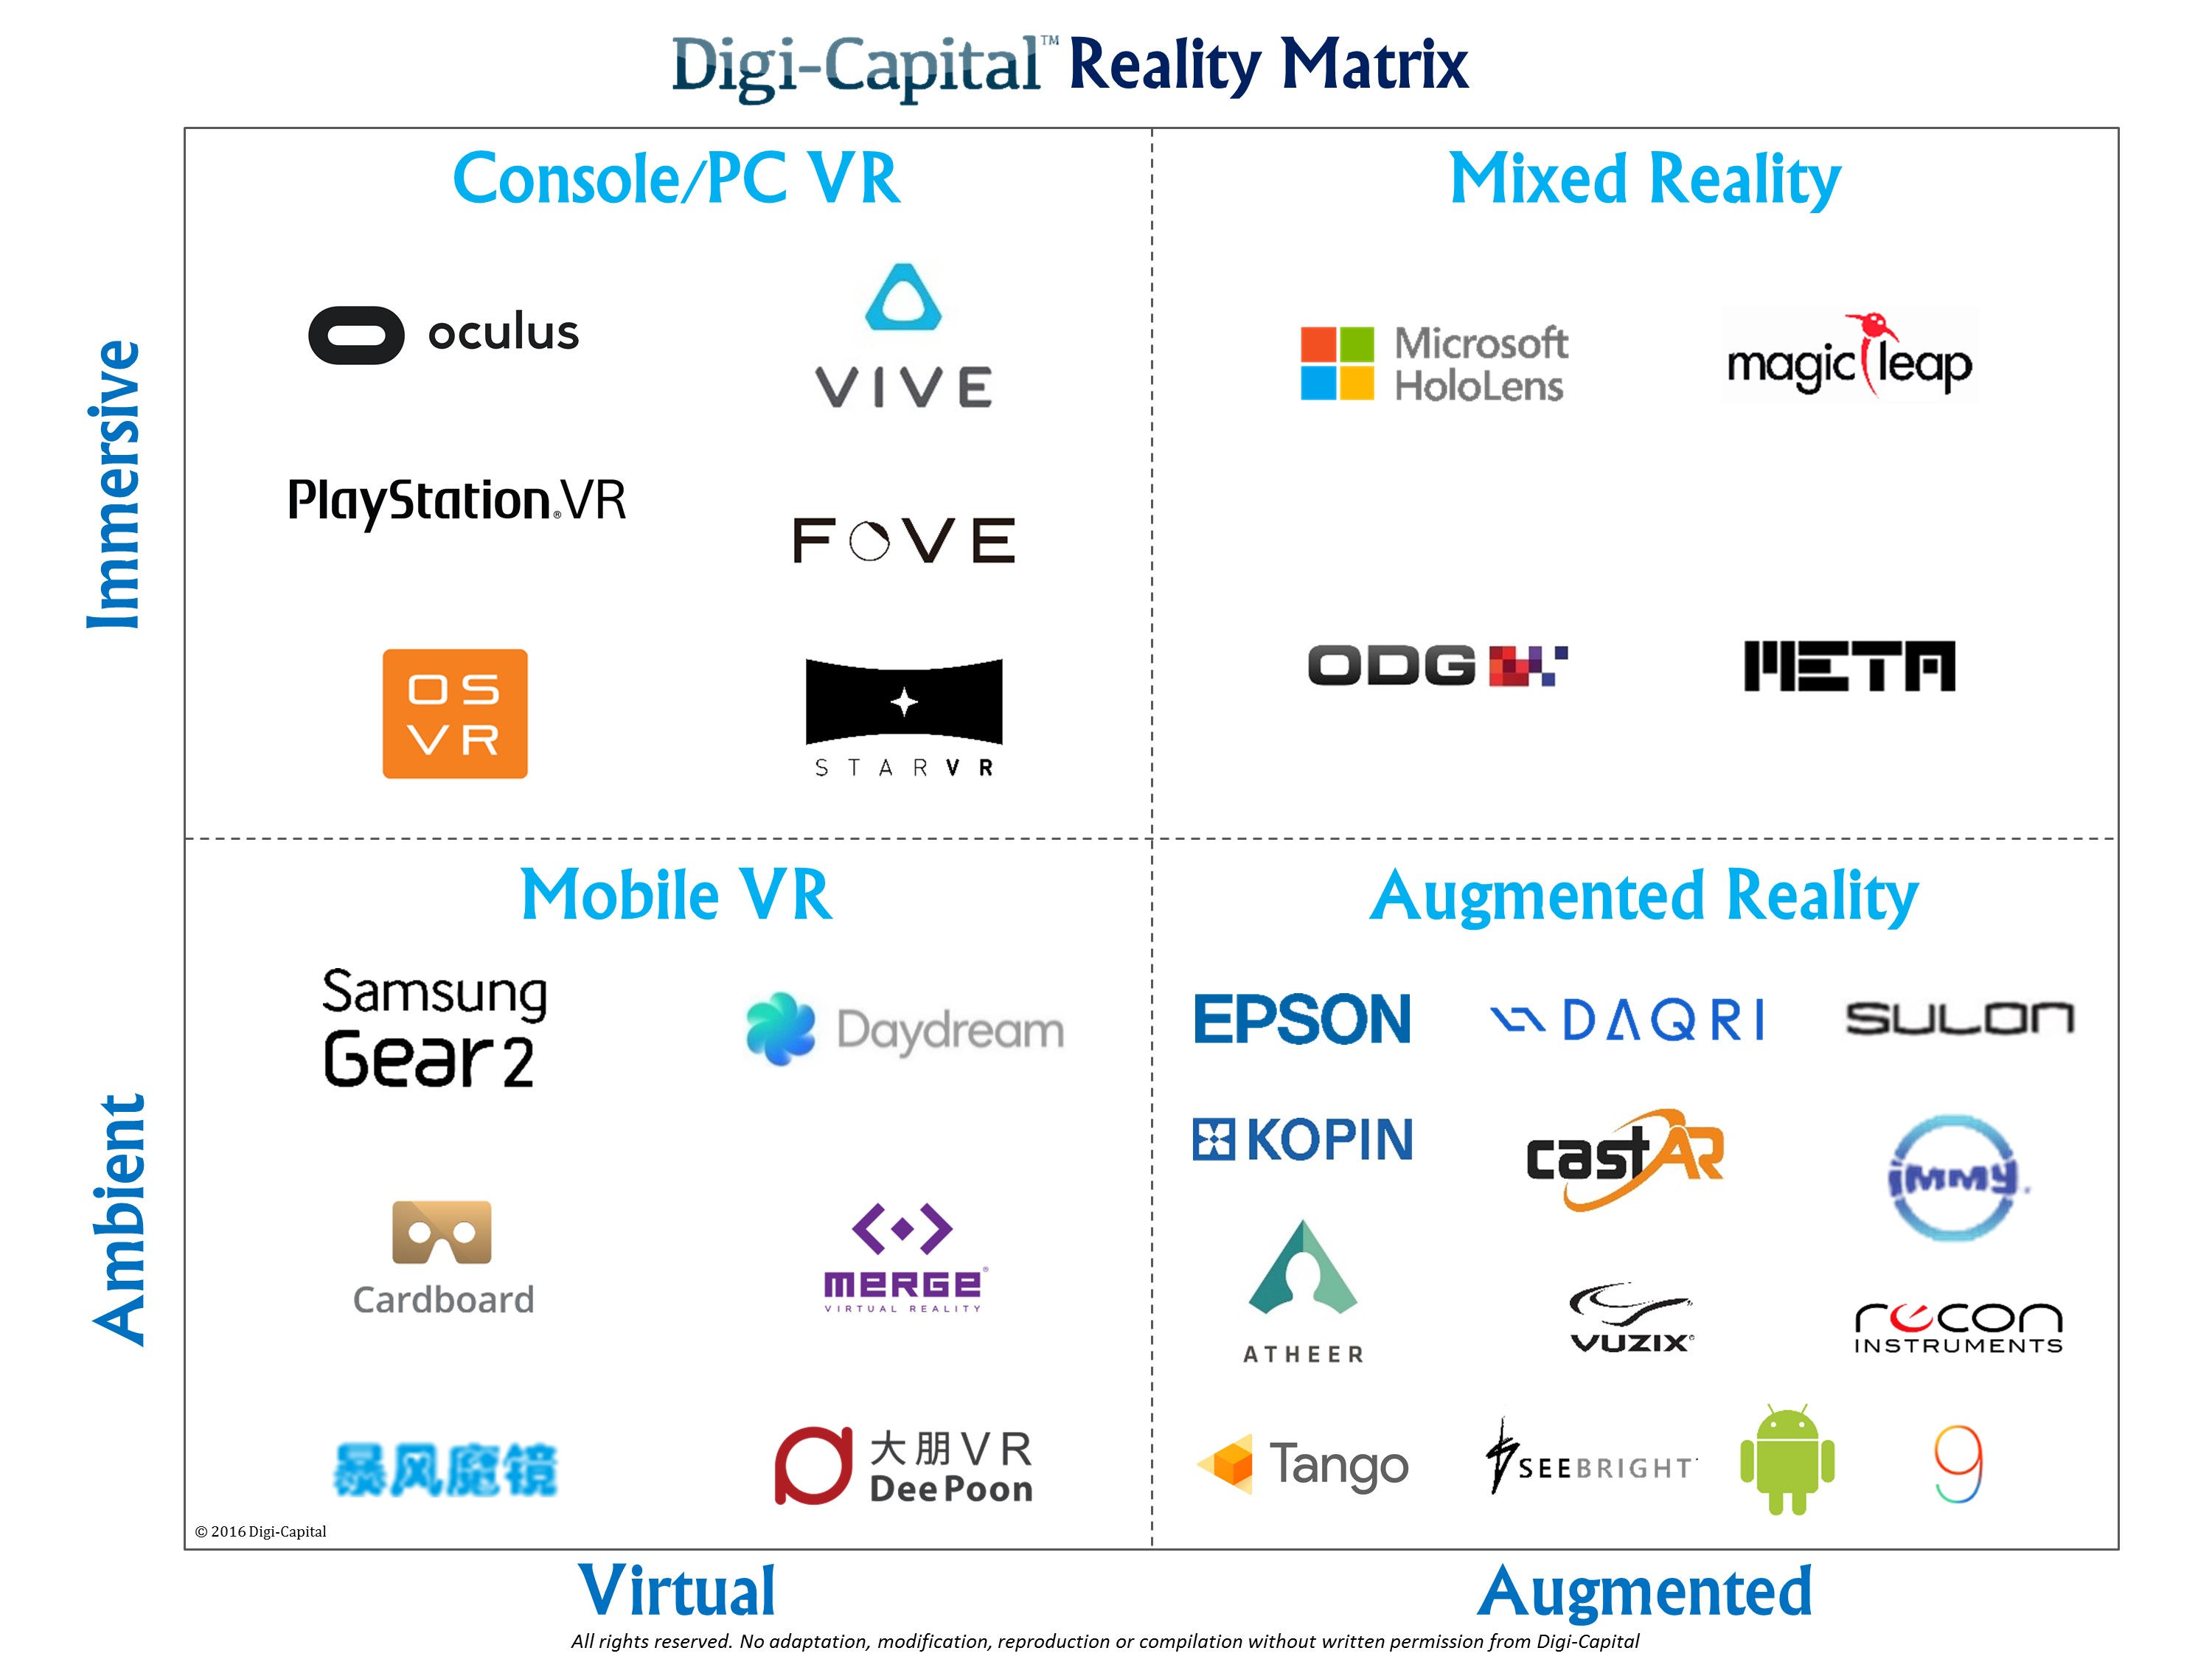 Digi-Capital Reality Matrix